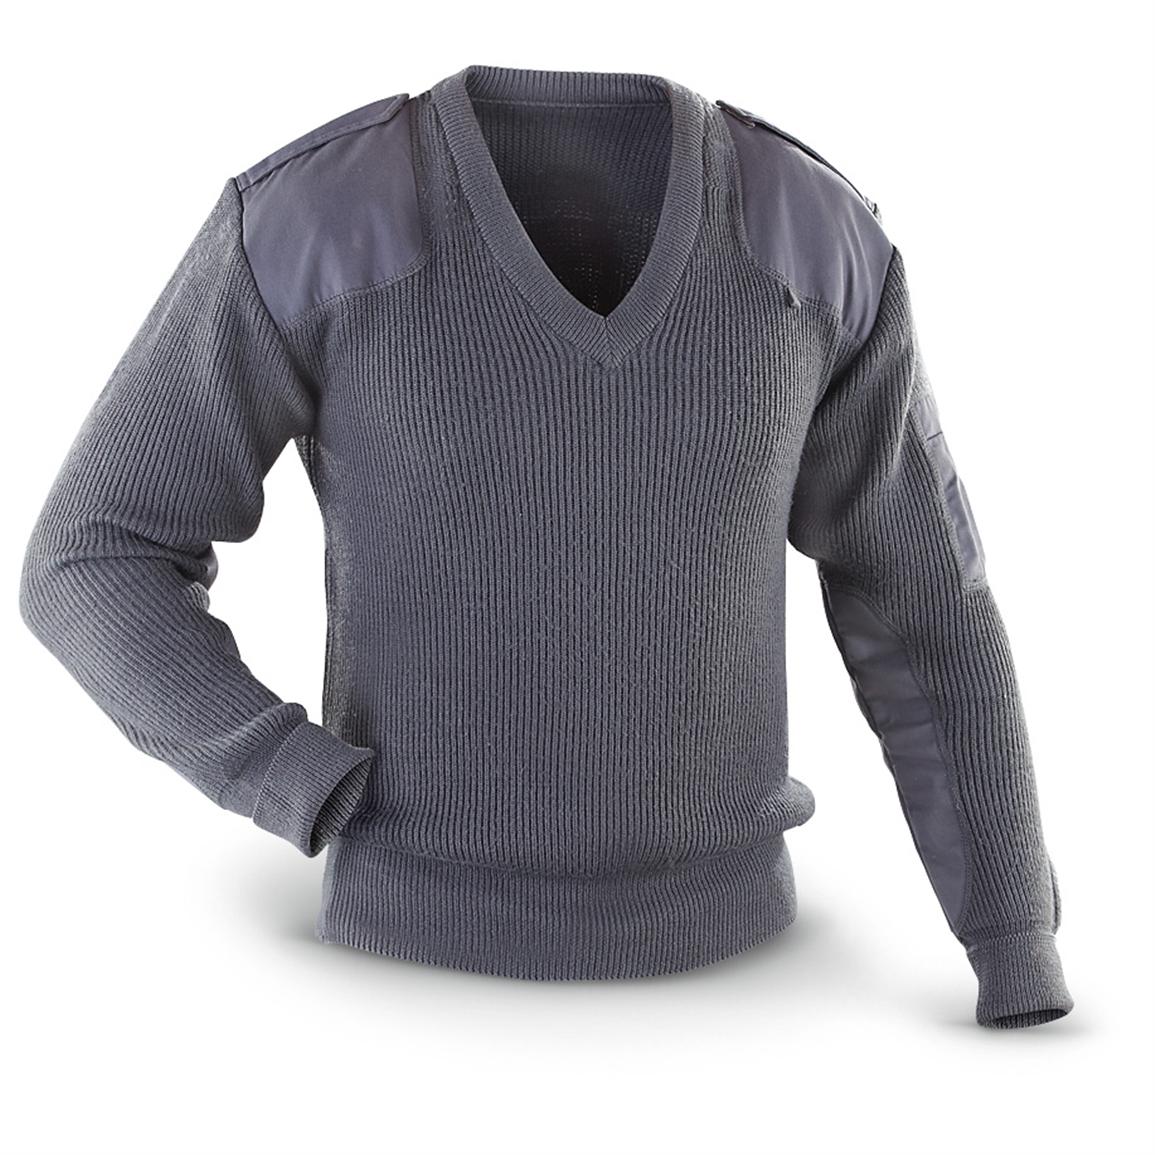 Used Italian Military Commando Sweater, Gun Metal Gray